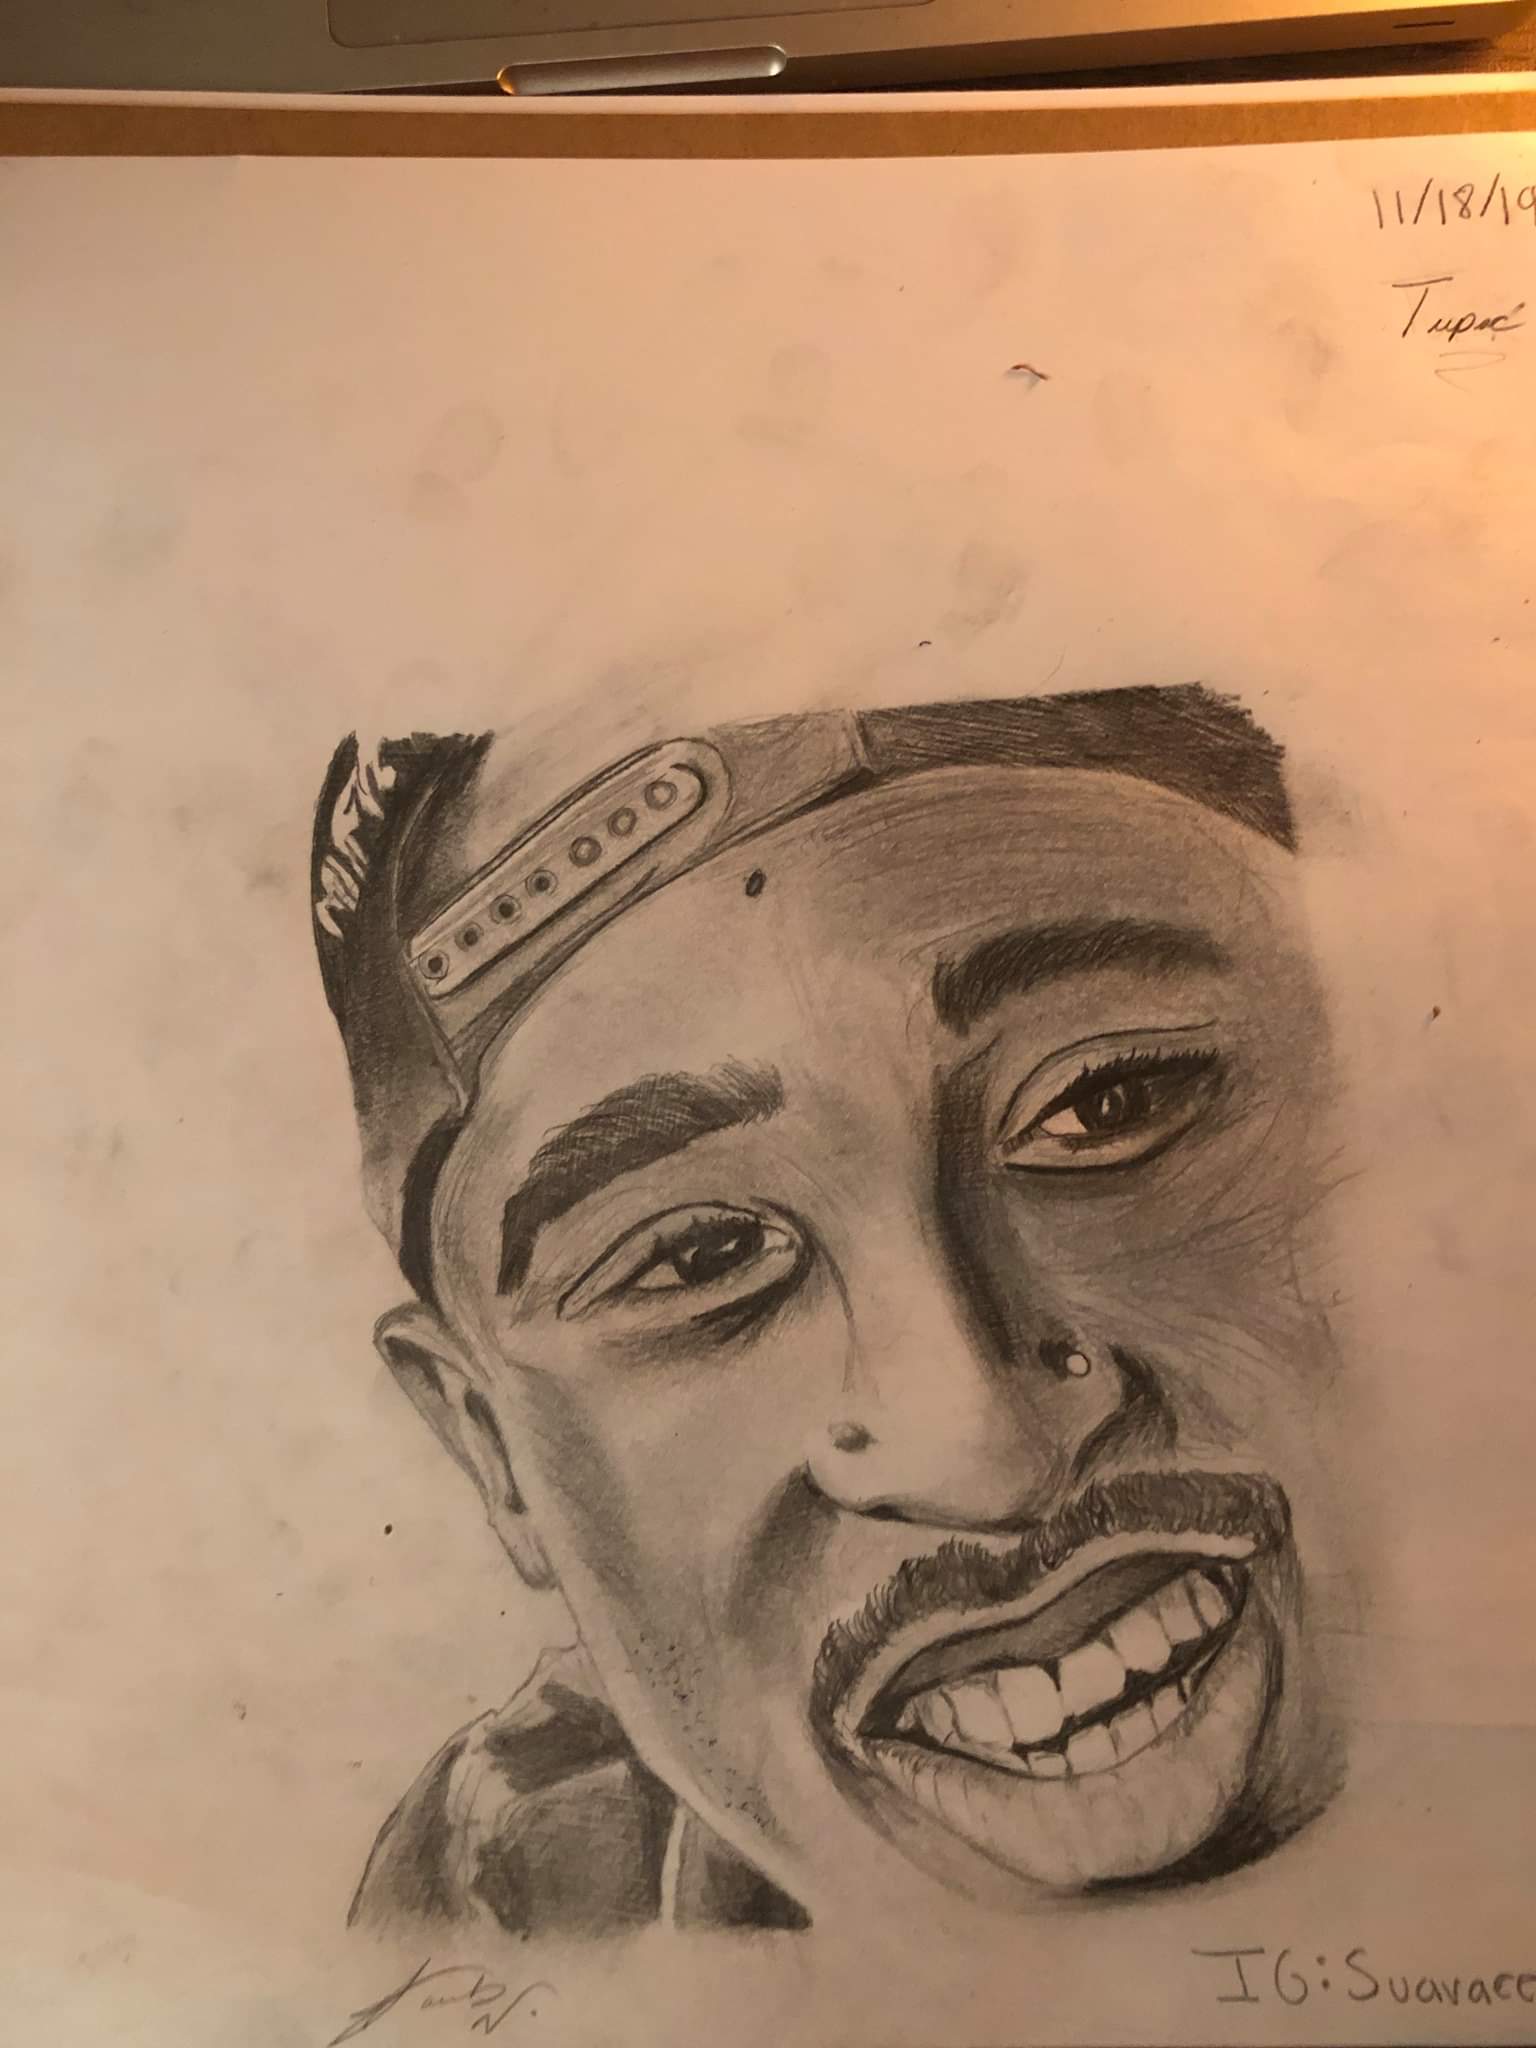 Tupac Shakur drawing